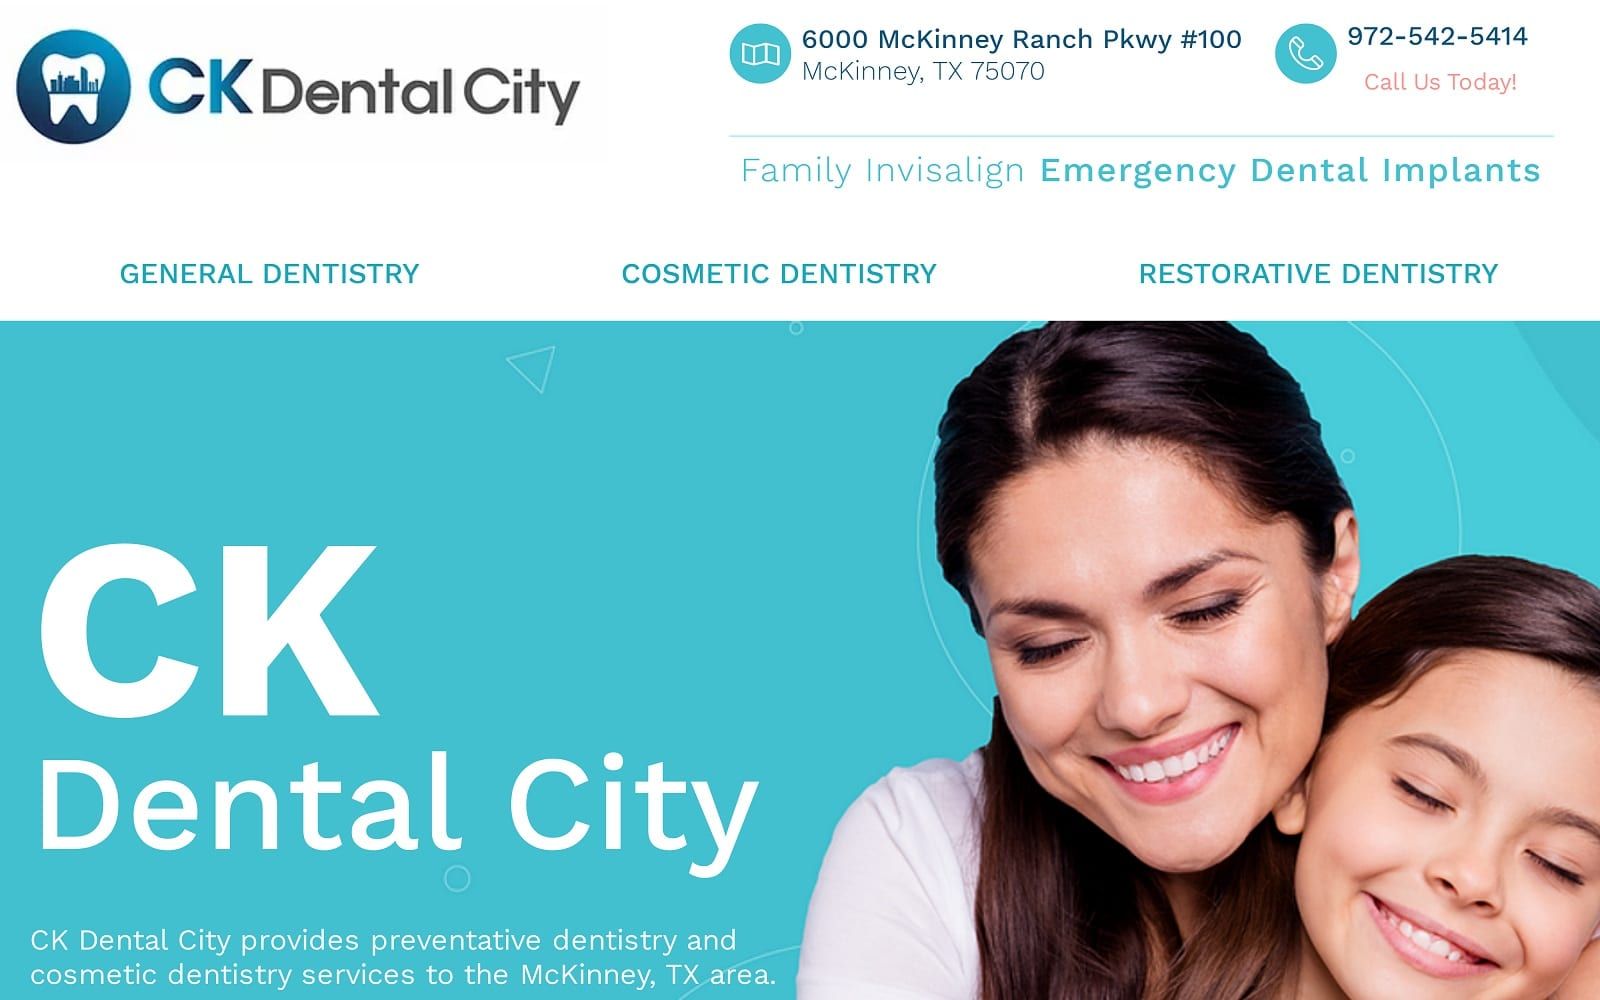 The screenshot of ck dental city family invisalign emergency dental implants ckdentalcity. Com website